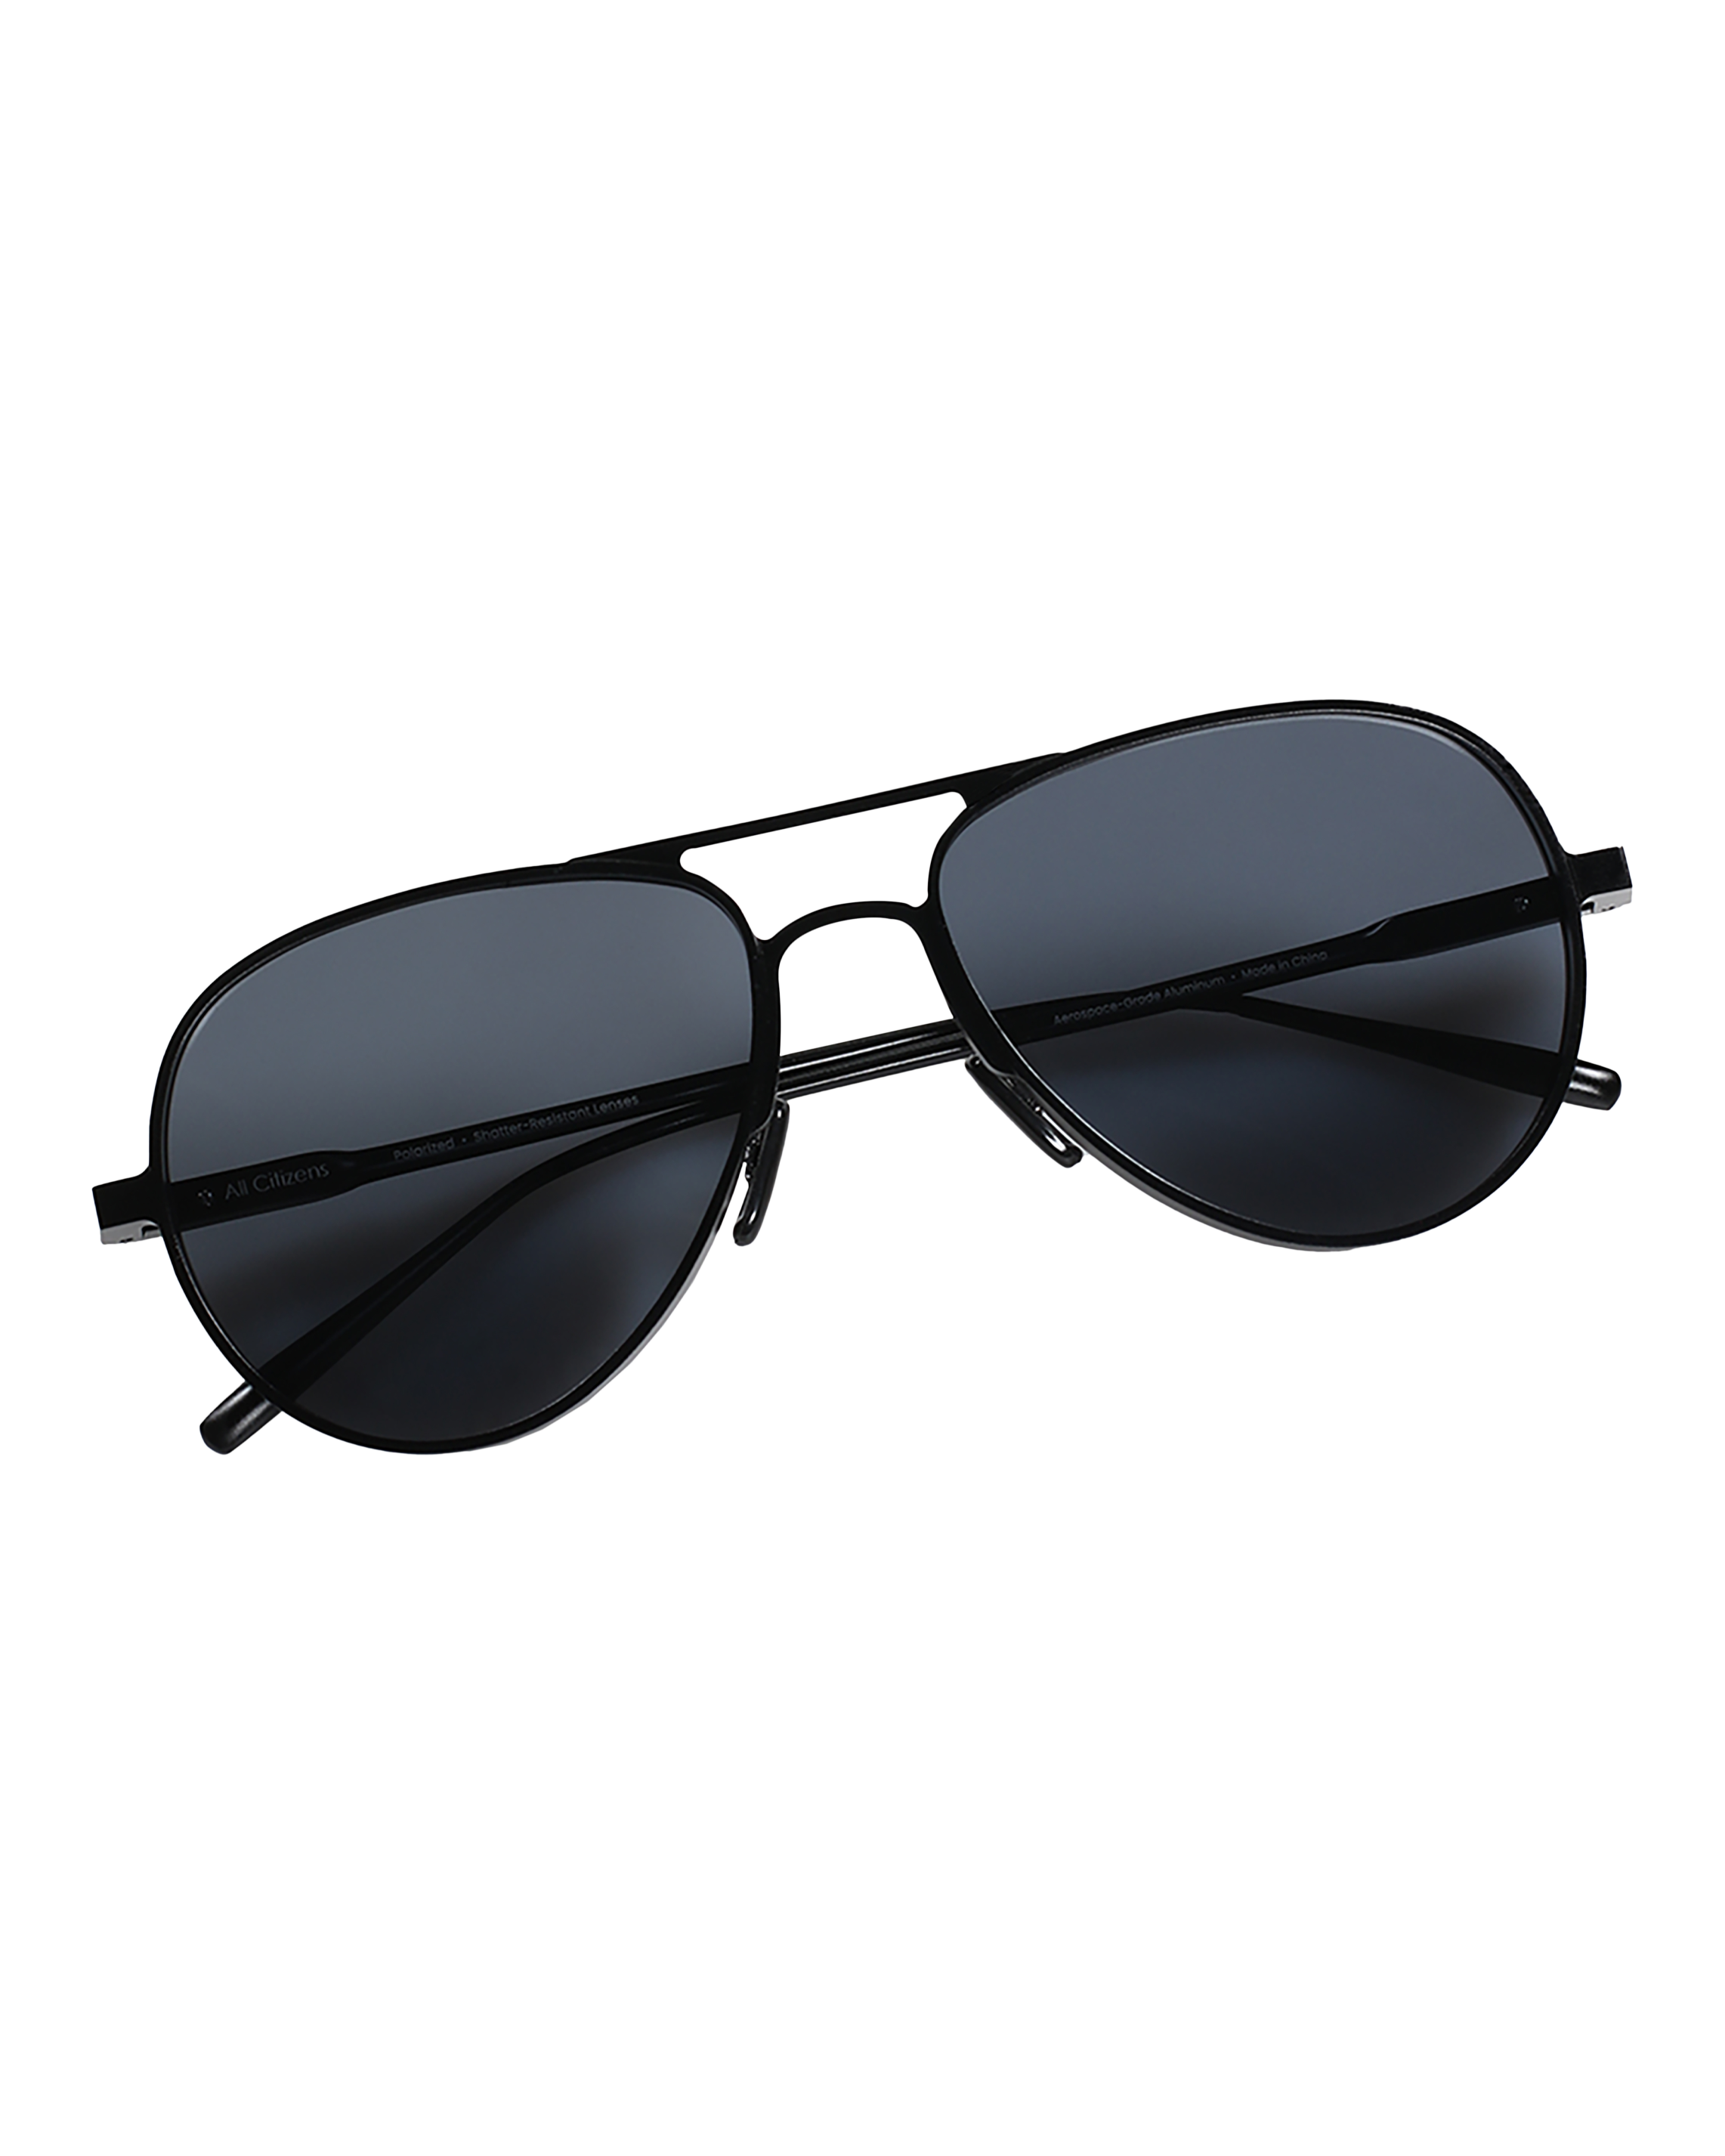 Men's Aviator Sunglasses, Durable Metal & Polarized